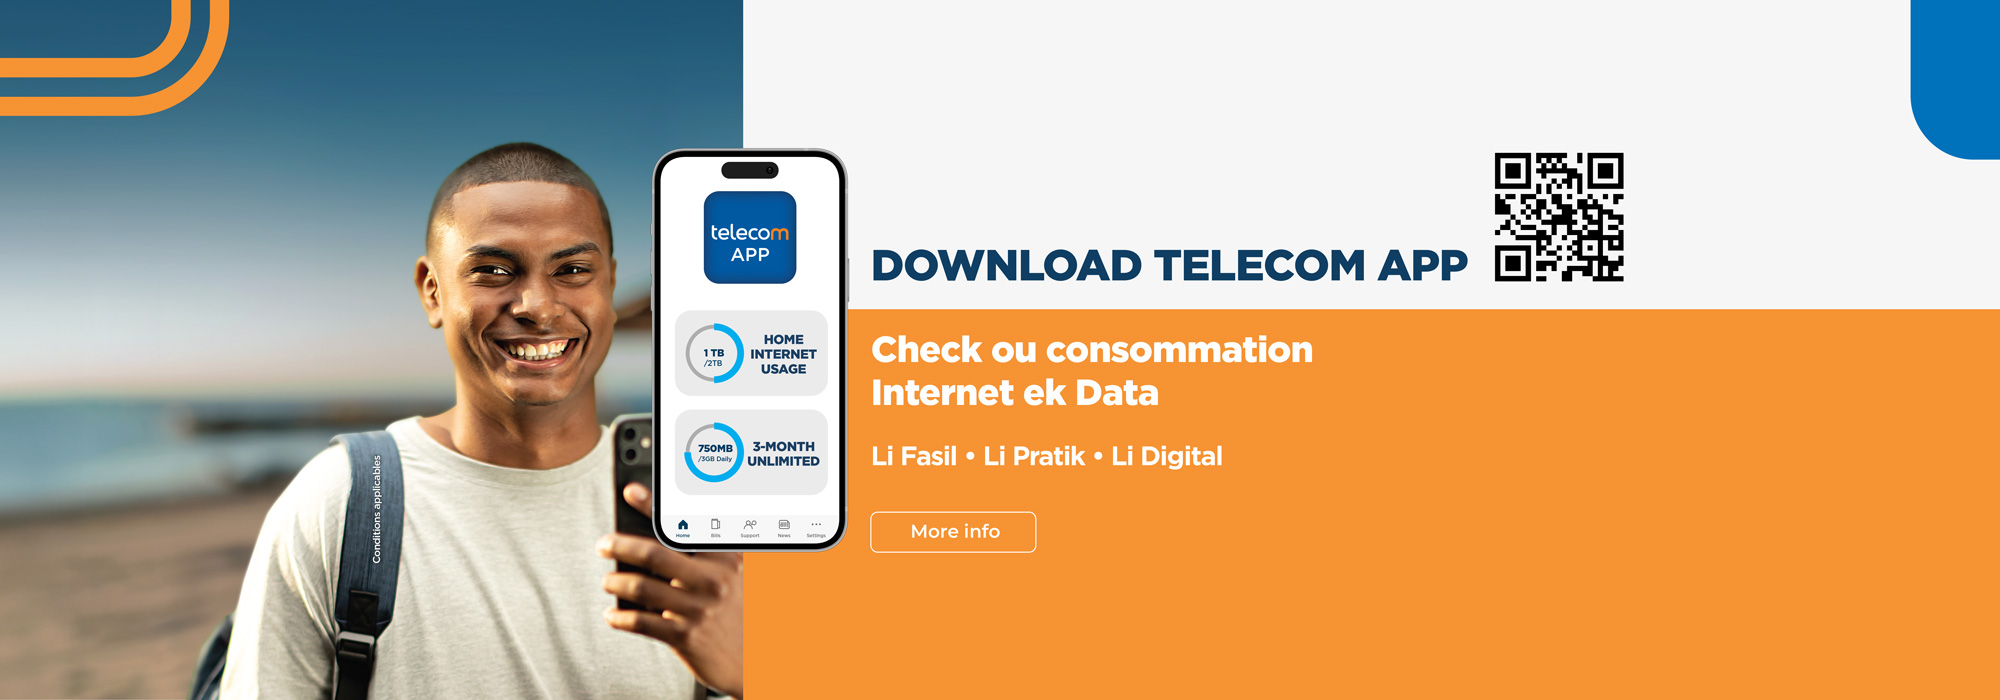 myt.mu - telecom app - check Internet and Data consumption